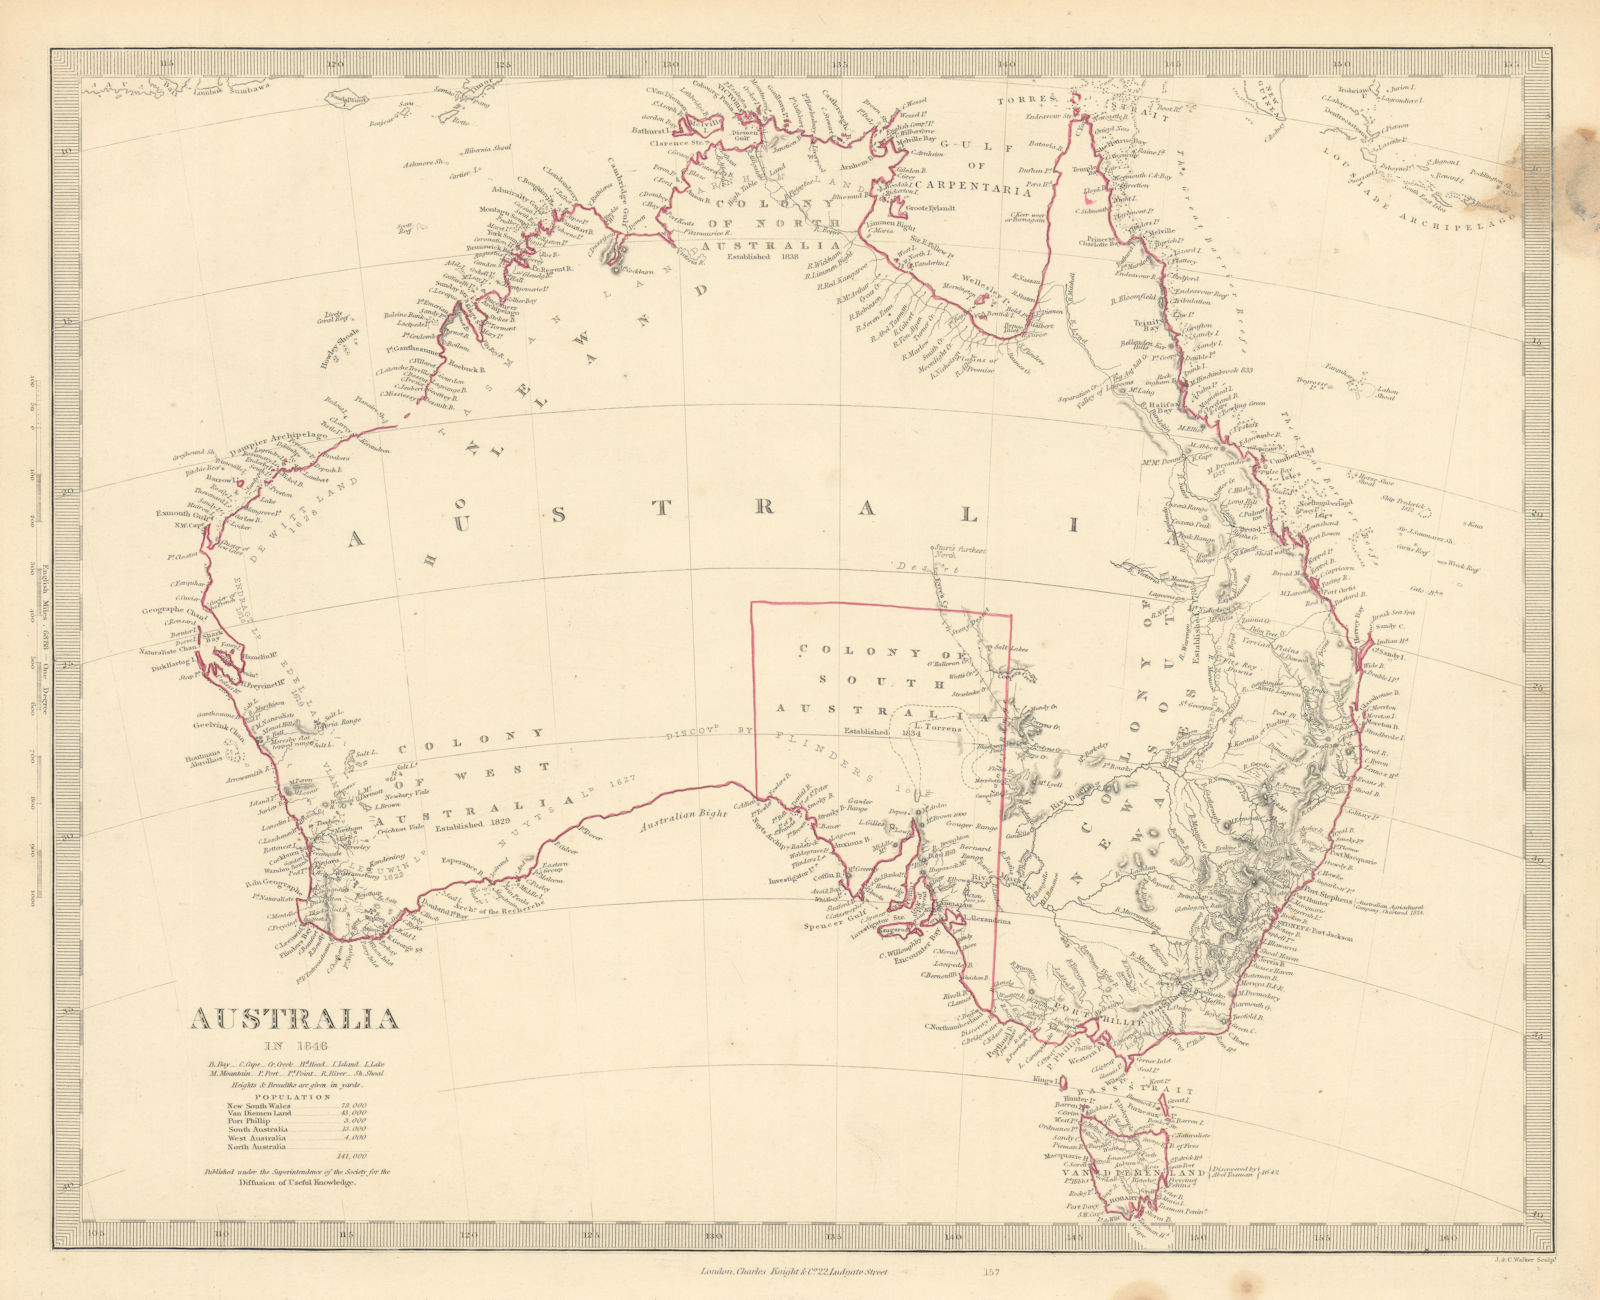 AUSTRALIA IN 1846. Shows dates colonies established. Population. SDUK 1851 map